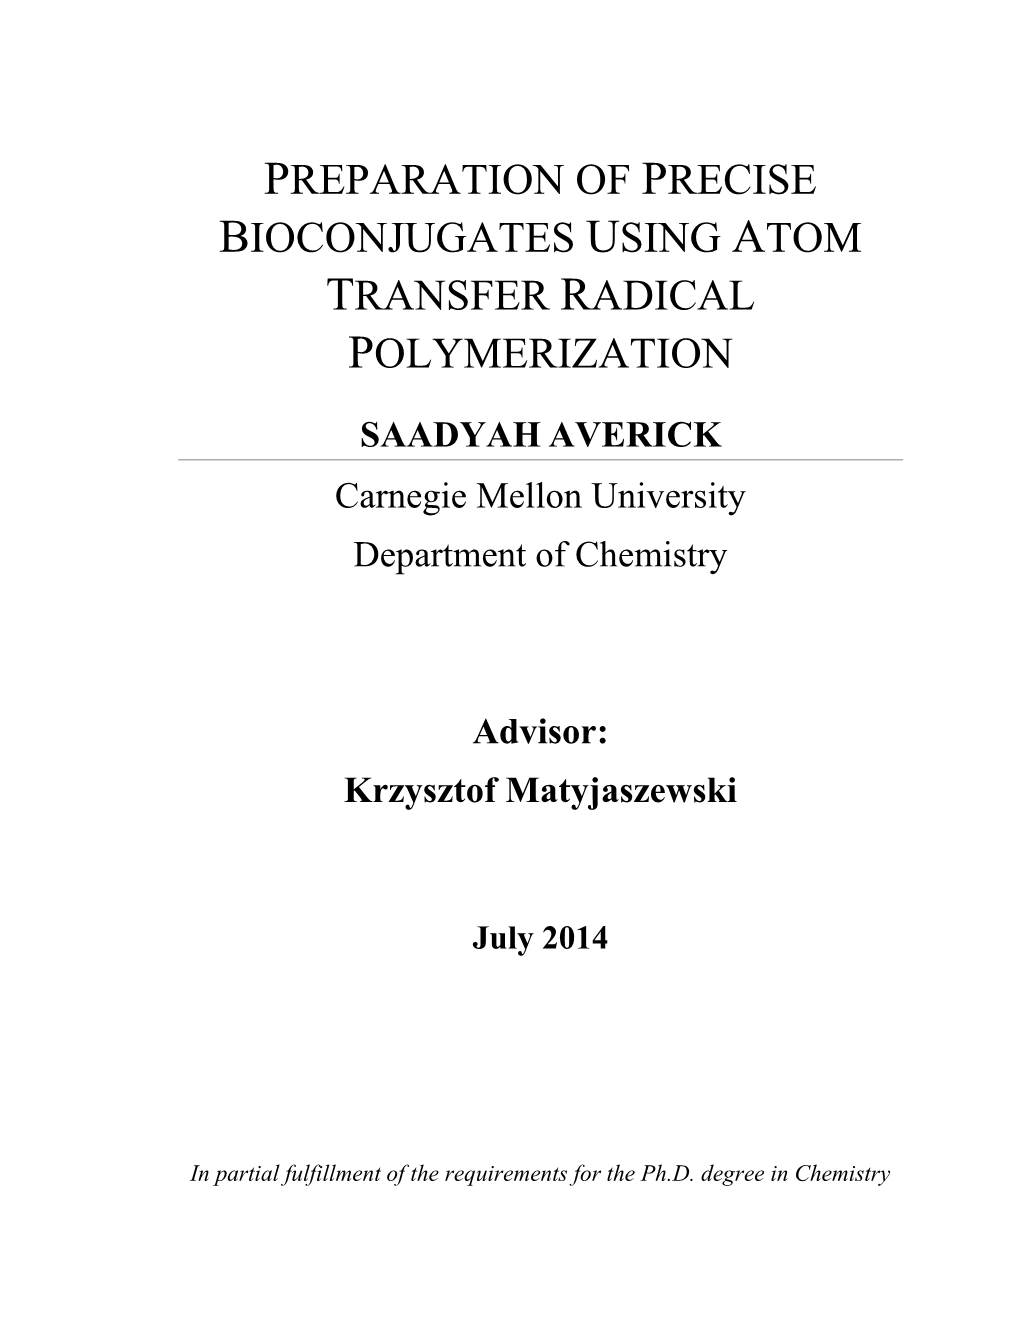 Preparation of Precise Bioconjugates Using Atom Transfer Radical Polymerization